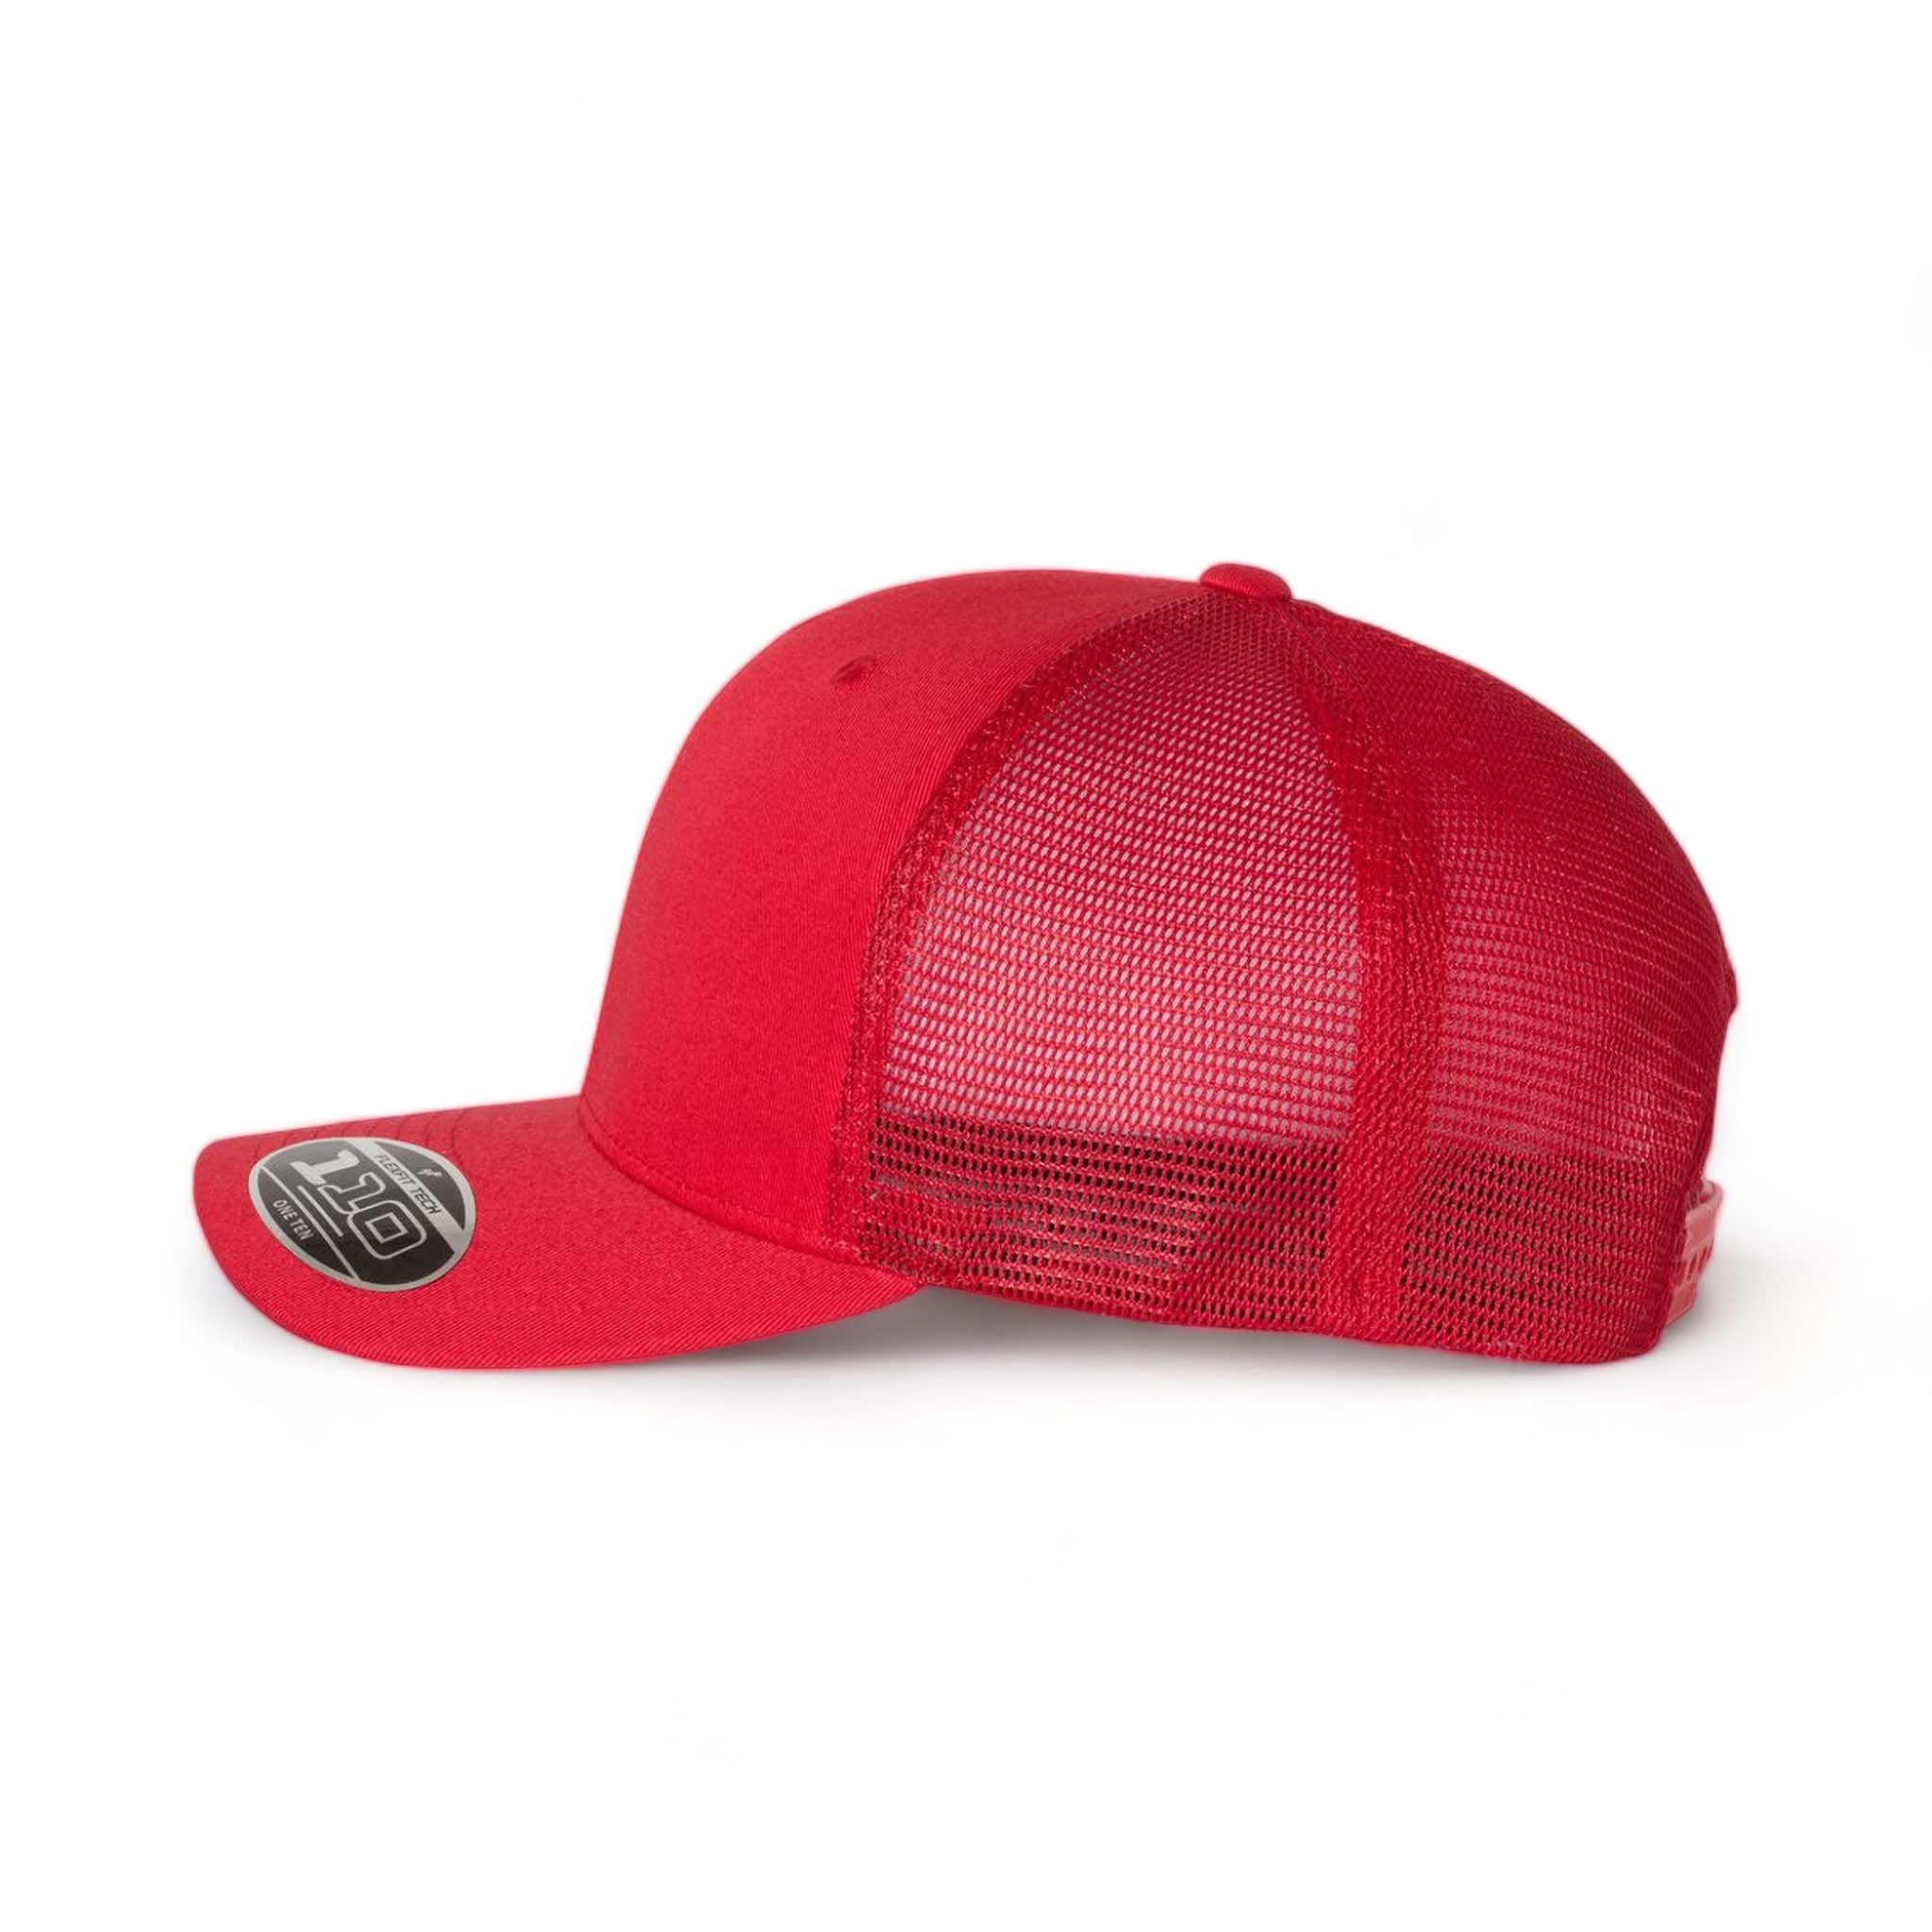 Side view of Flexfit 110M custom hat in red